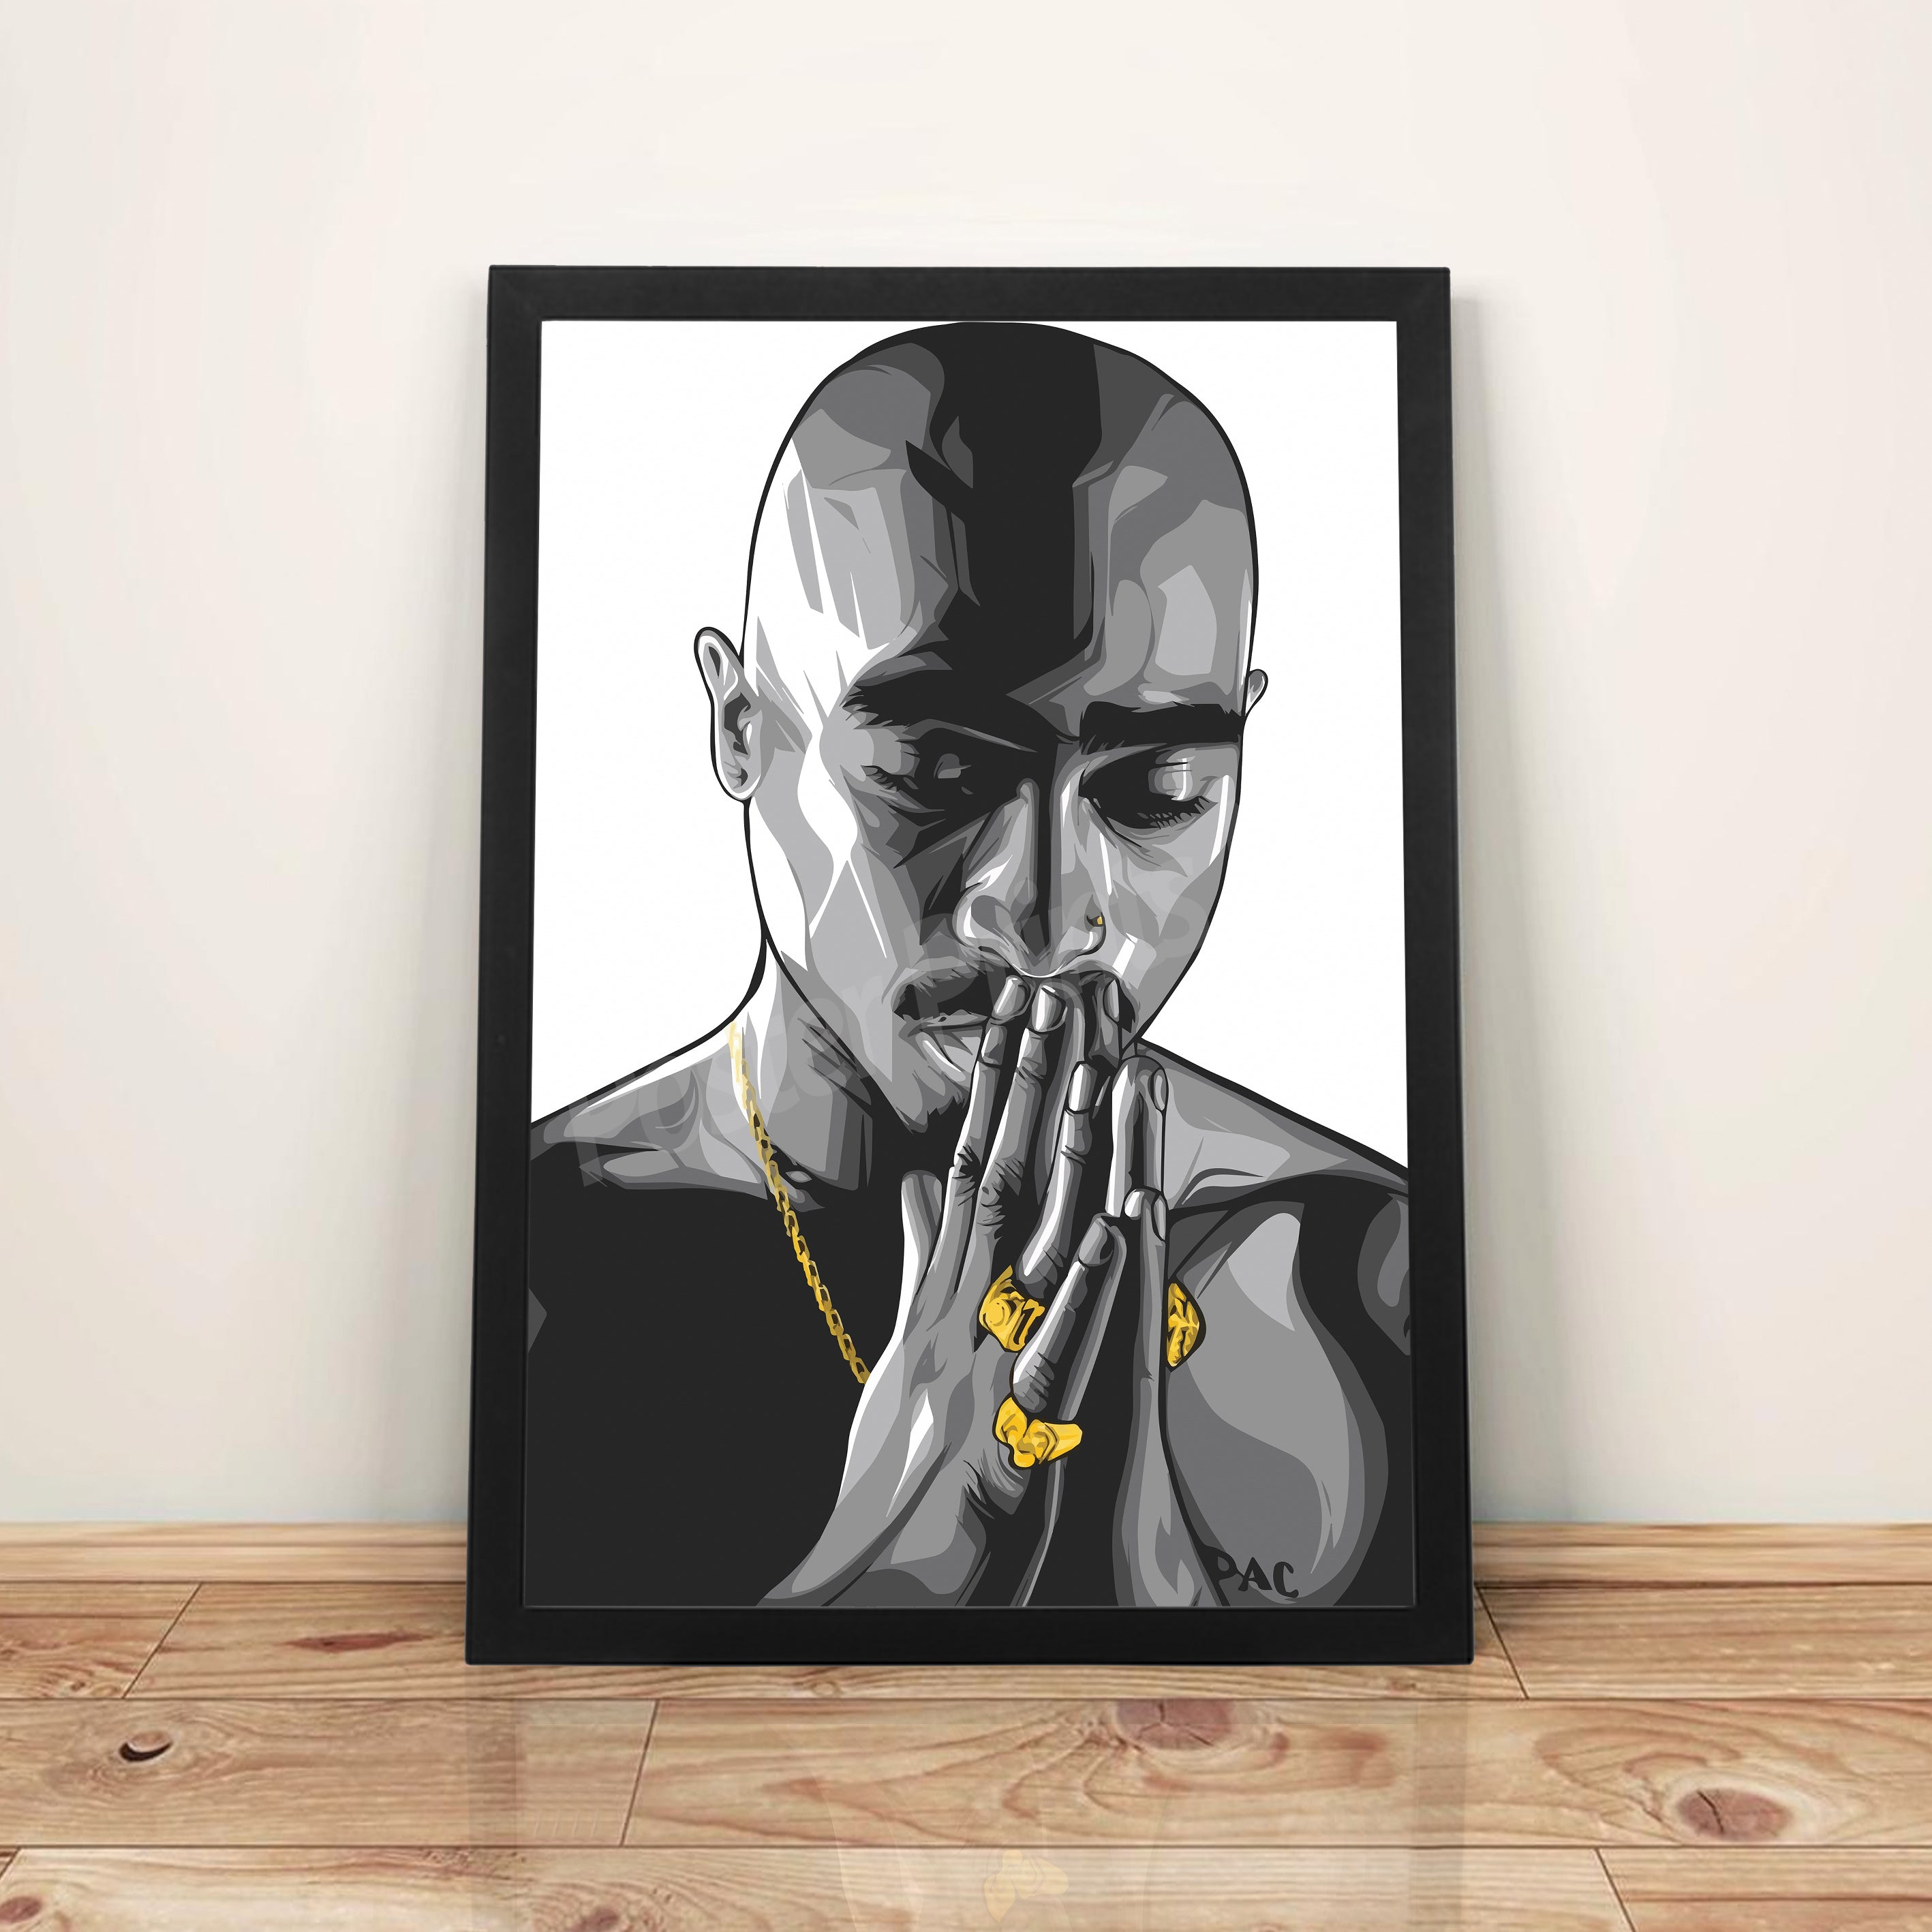 Tupac Shakur - A3 Framed Art Poster - Poster Prints NZ